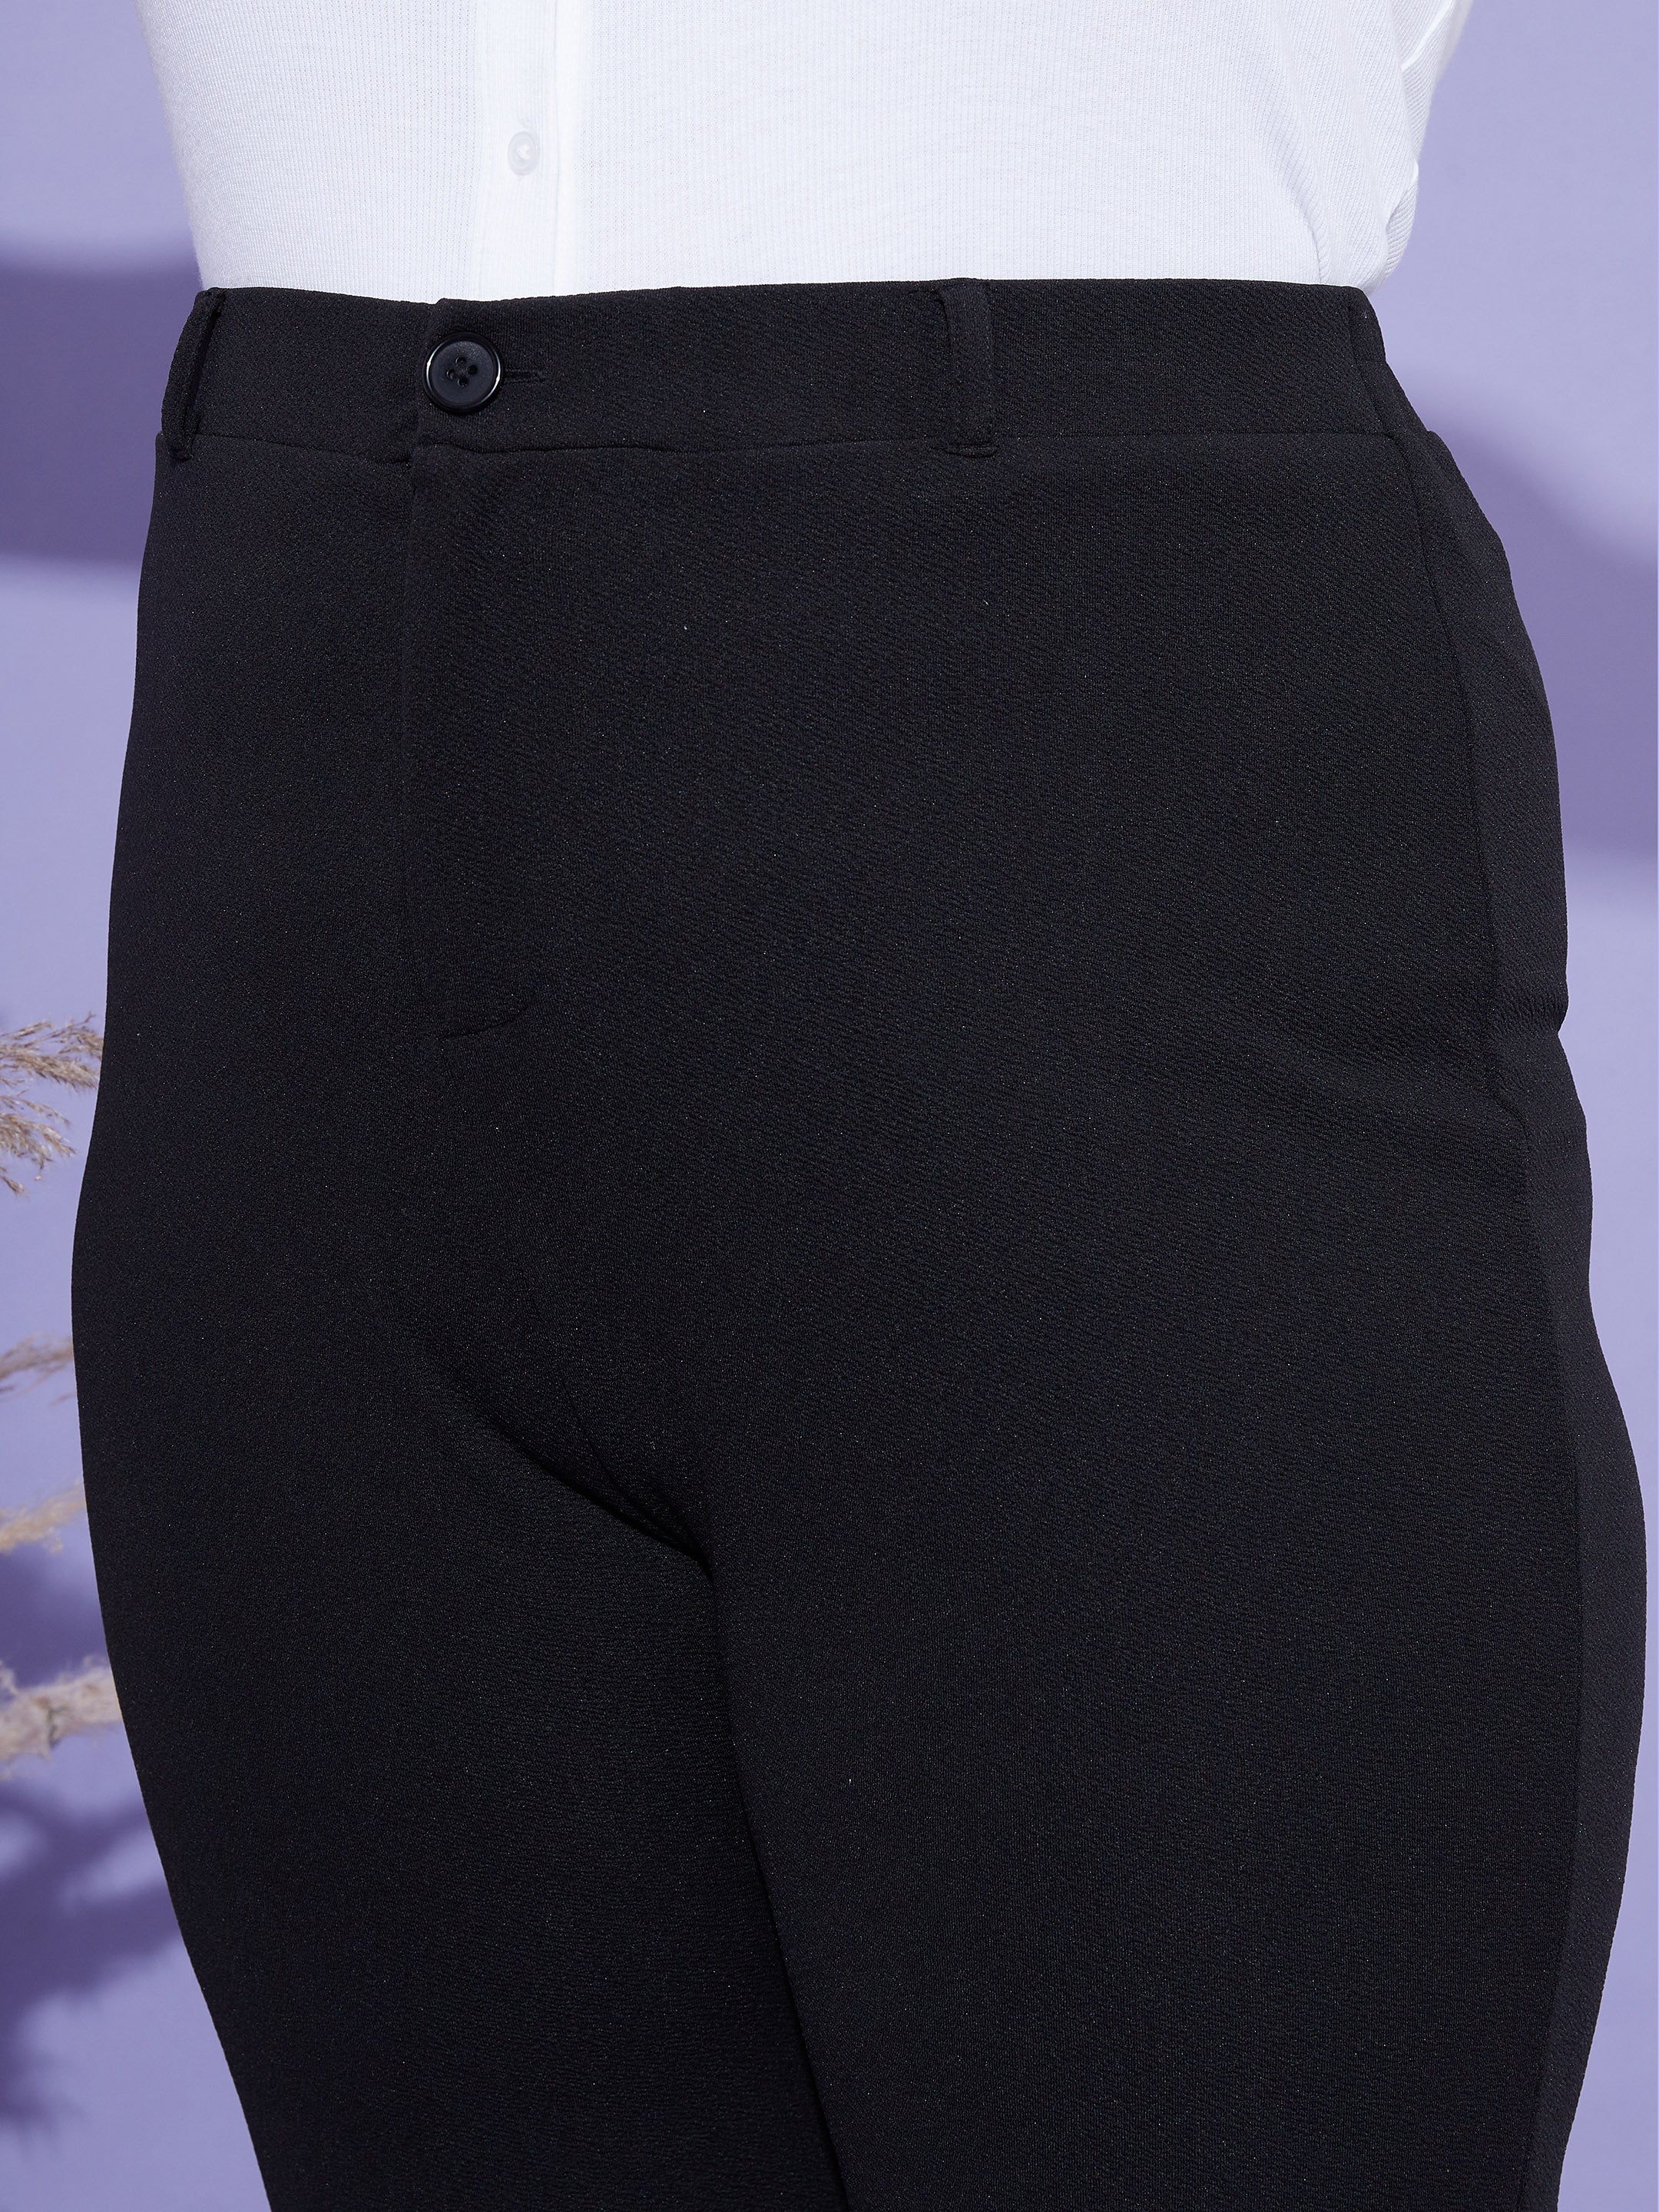 Women's Black Peplum Top With Kick Pleats Pants - SASSAFRAS